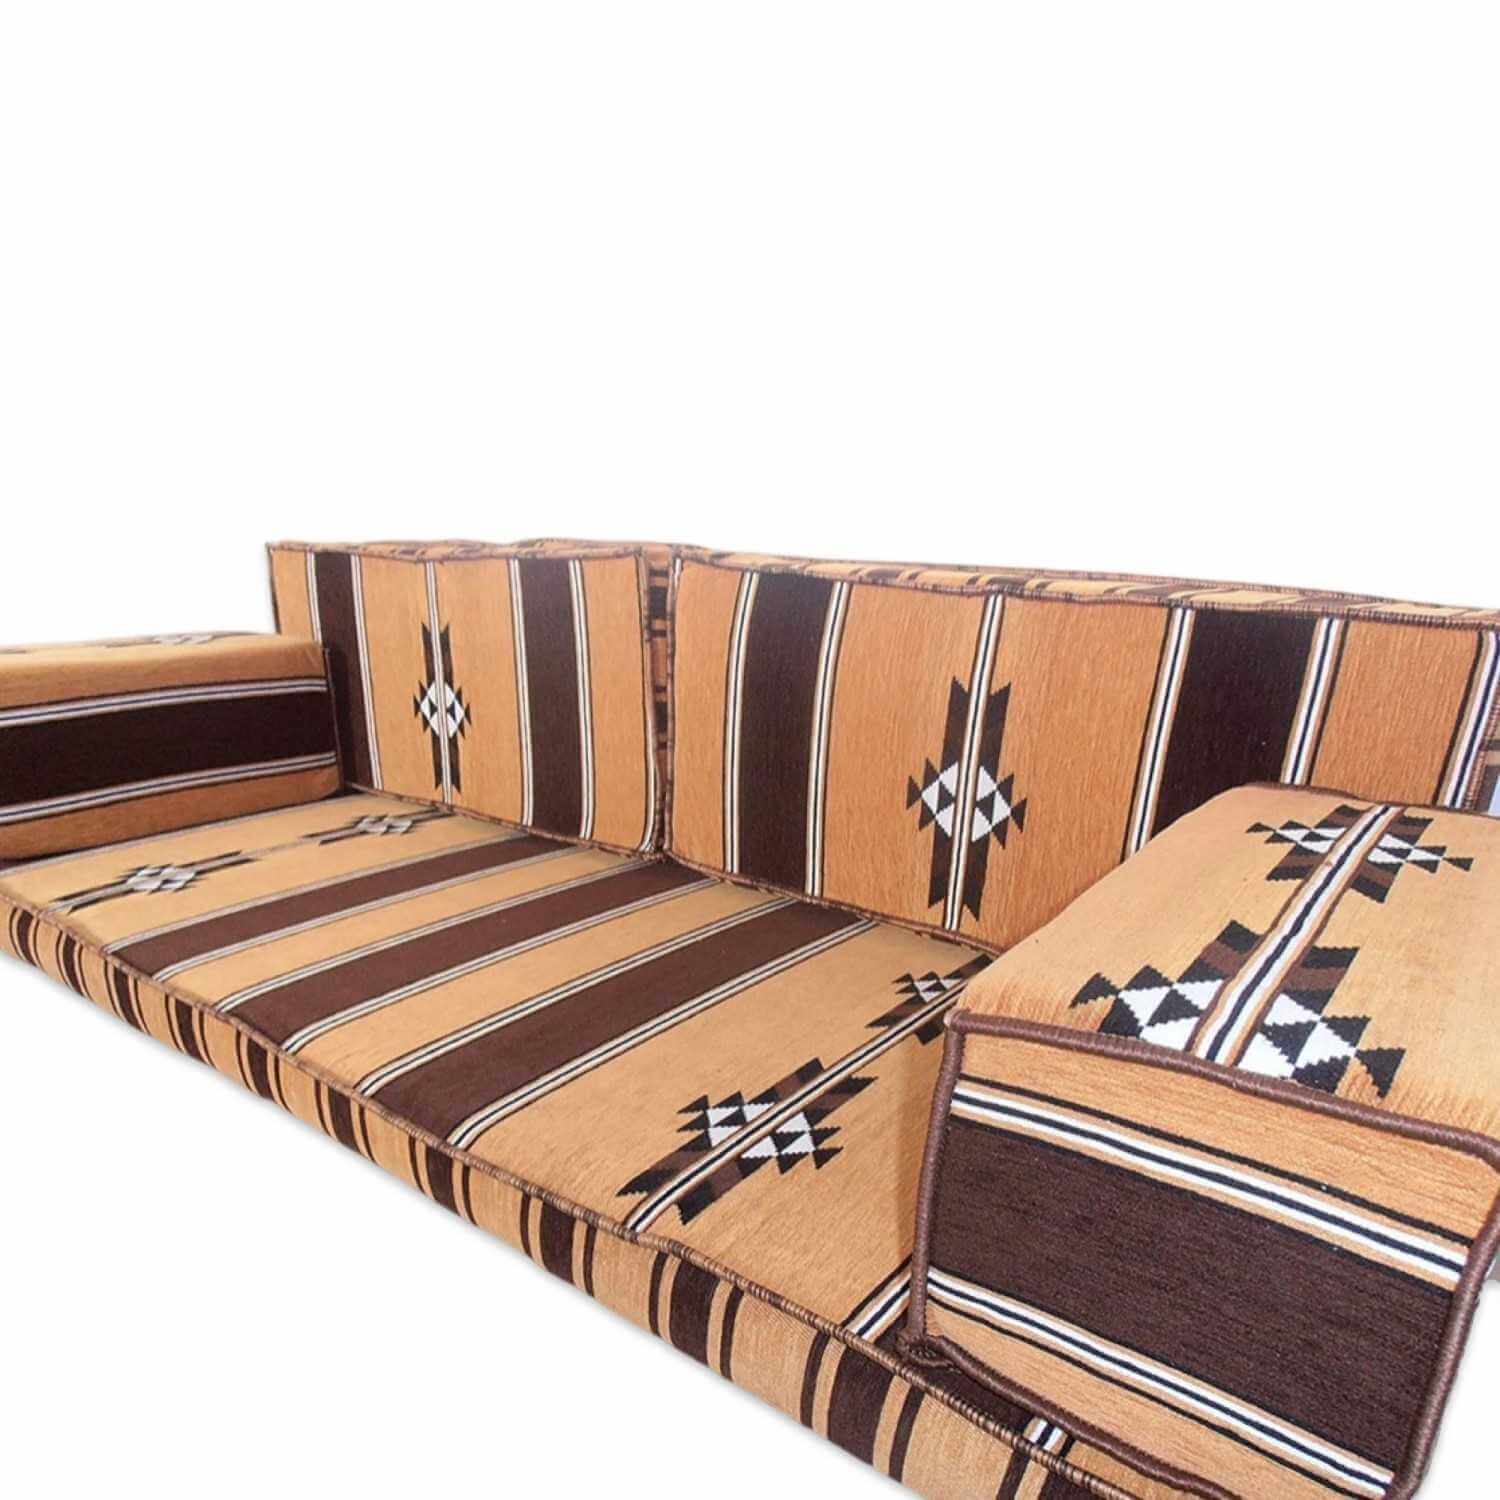 DAMASCUS Three Seater Majlis Floor Sofa Set